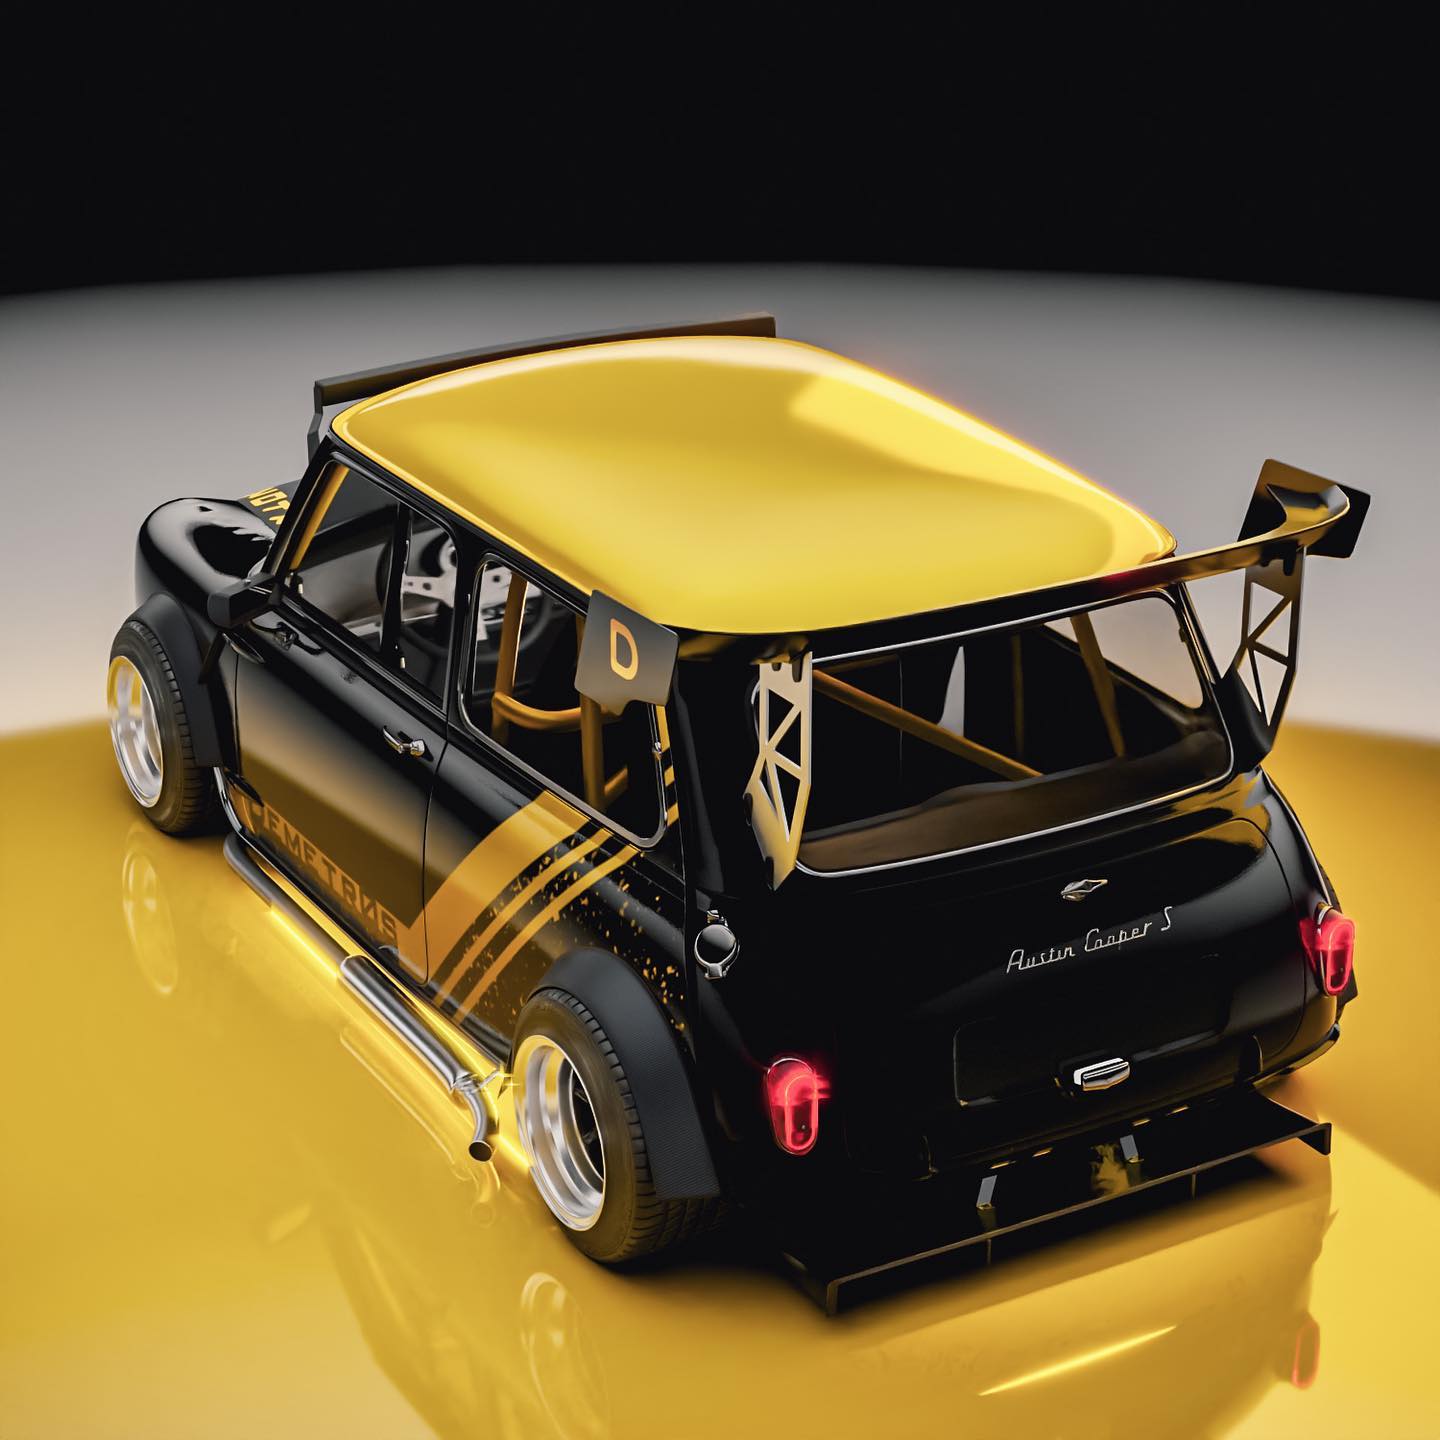 Gold-and-Black Austin Mini Cooper S Looks Like Manhart Got Into